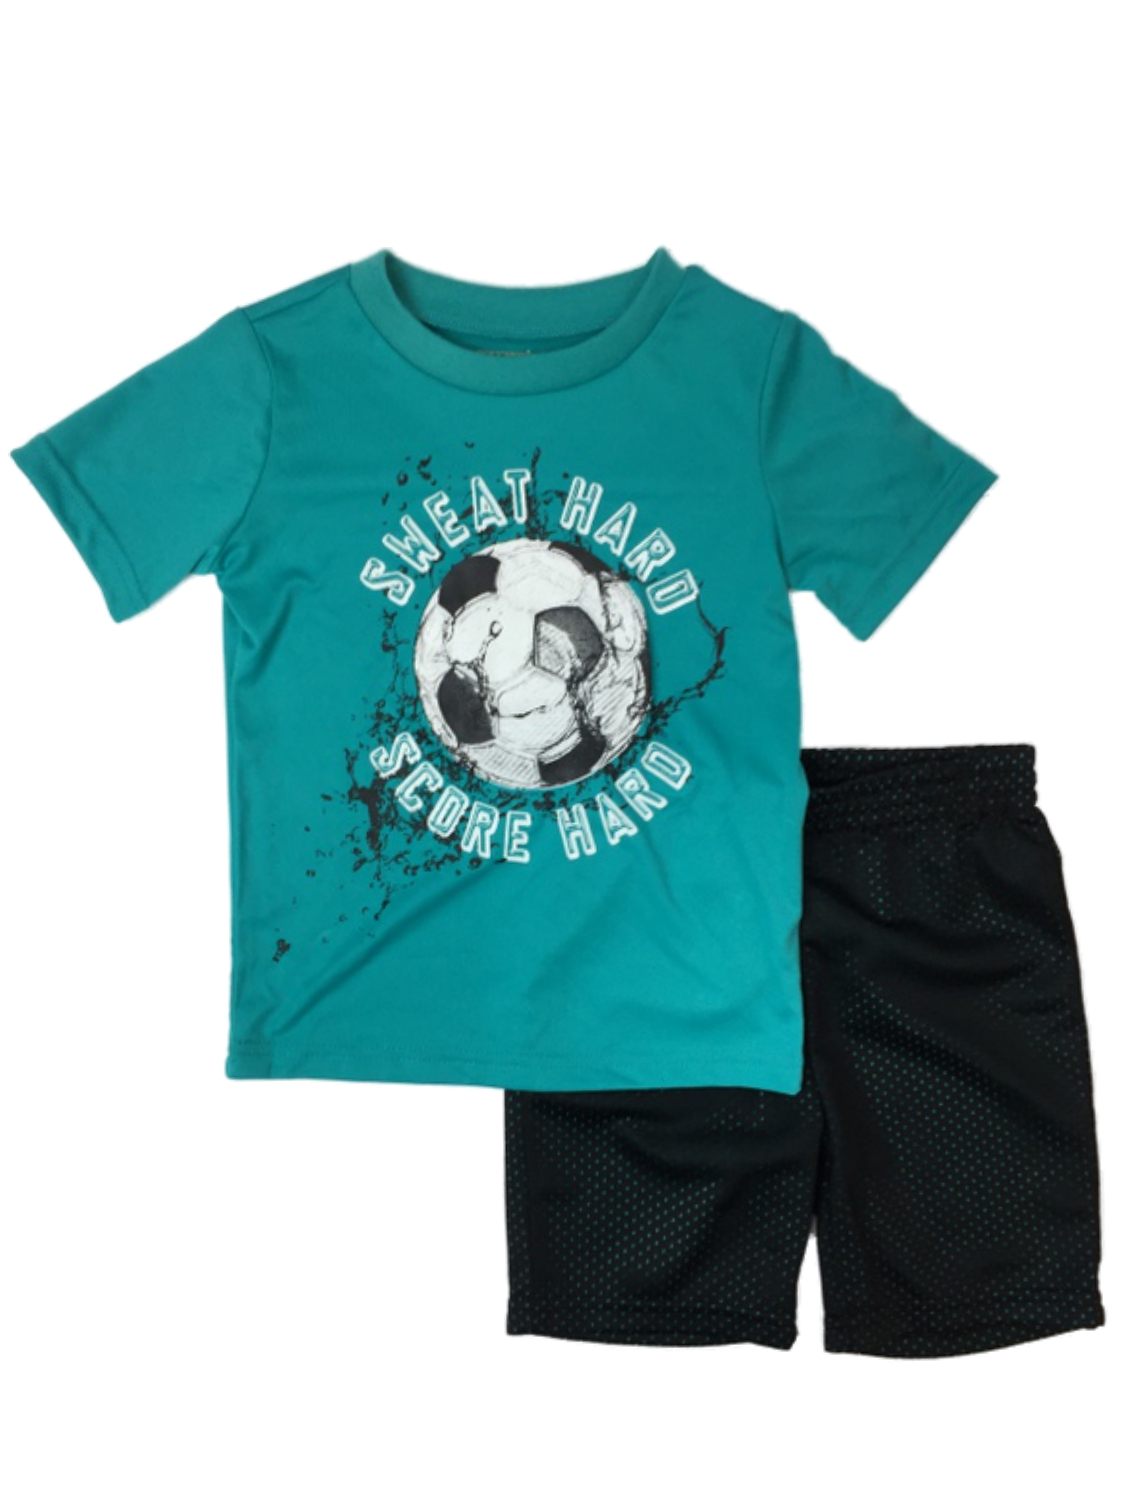 Toughskins Infant & Toddler Boys Sweat Hard Score Hard Baby Outfit Soccer Shirt & Shorts